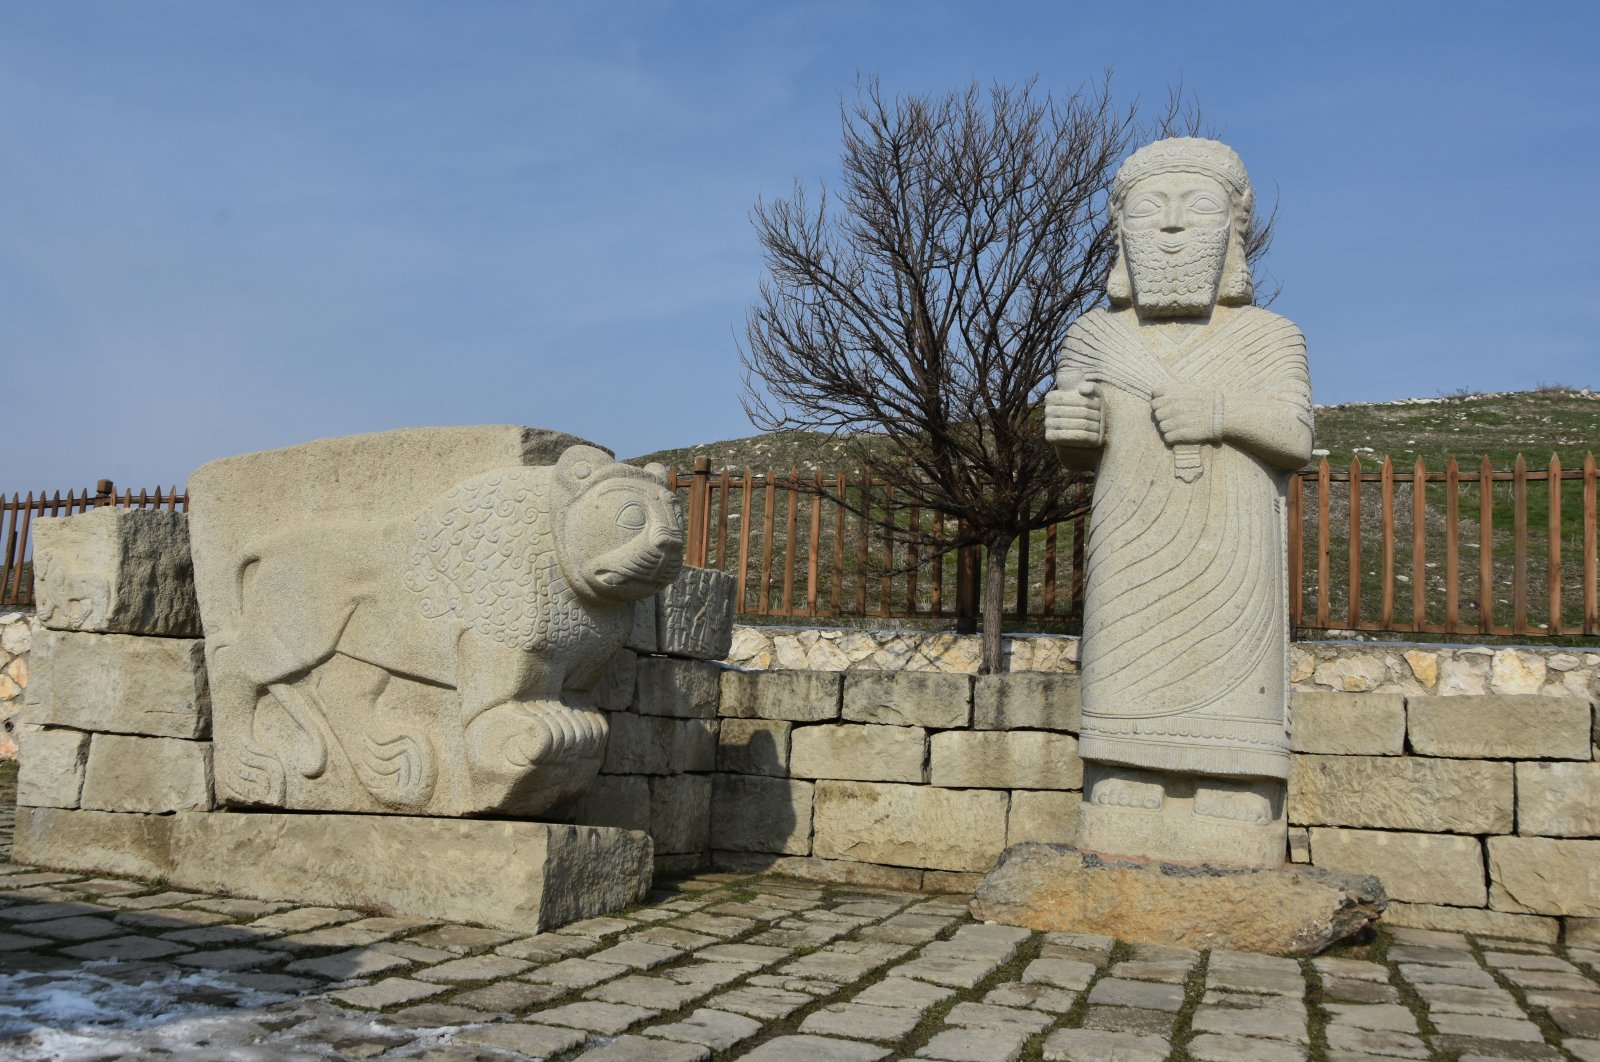 The statue of the Hittite king Tarhunza near a lion statue at the entrance of the Arslantepe Archaeological Site, Malatya, eastern Turkey, Feb. 5, 2021. (AA PHOTO)